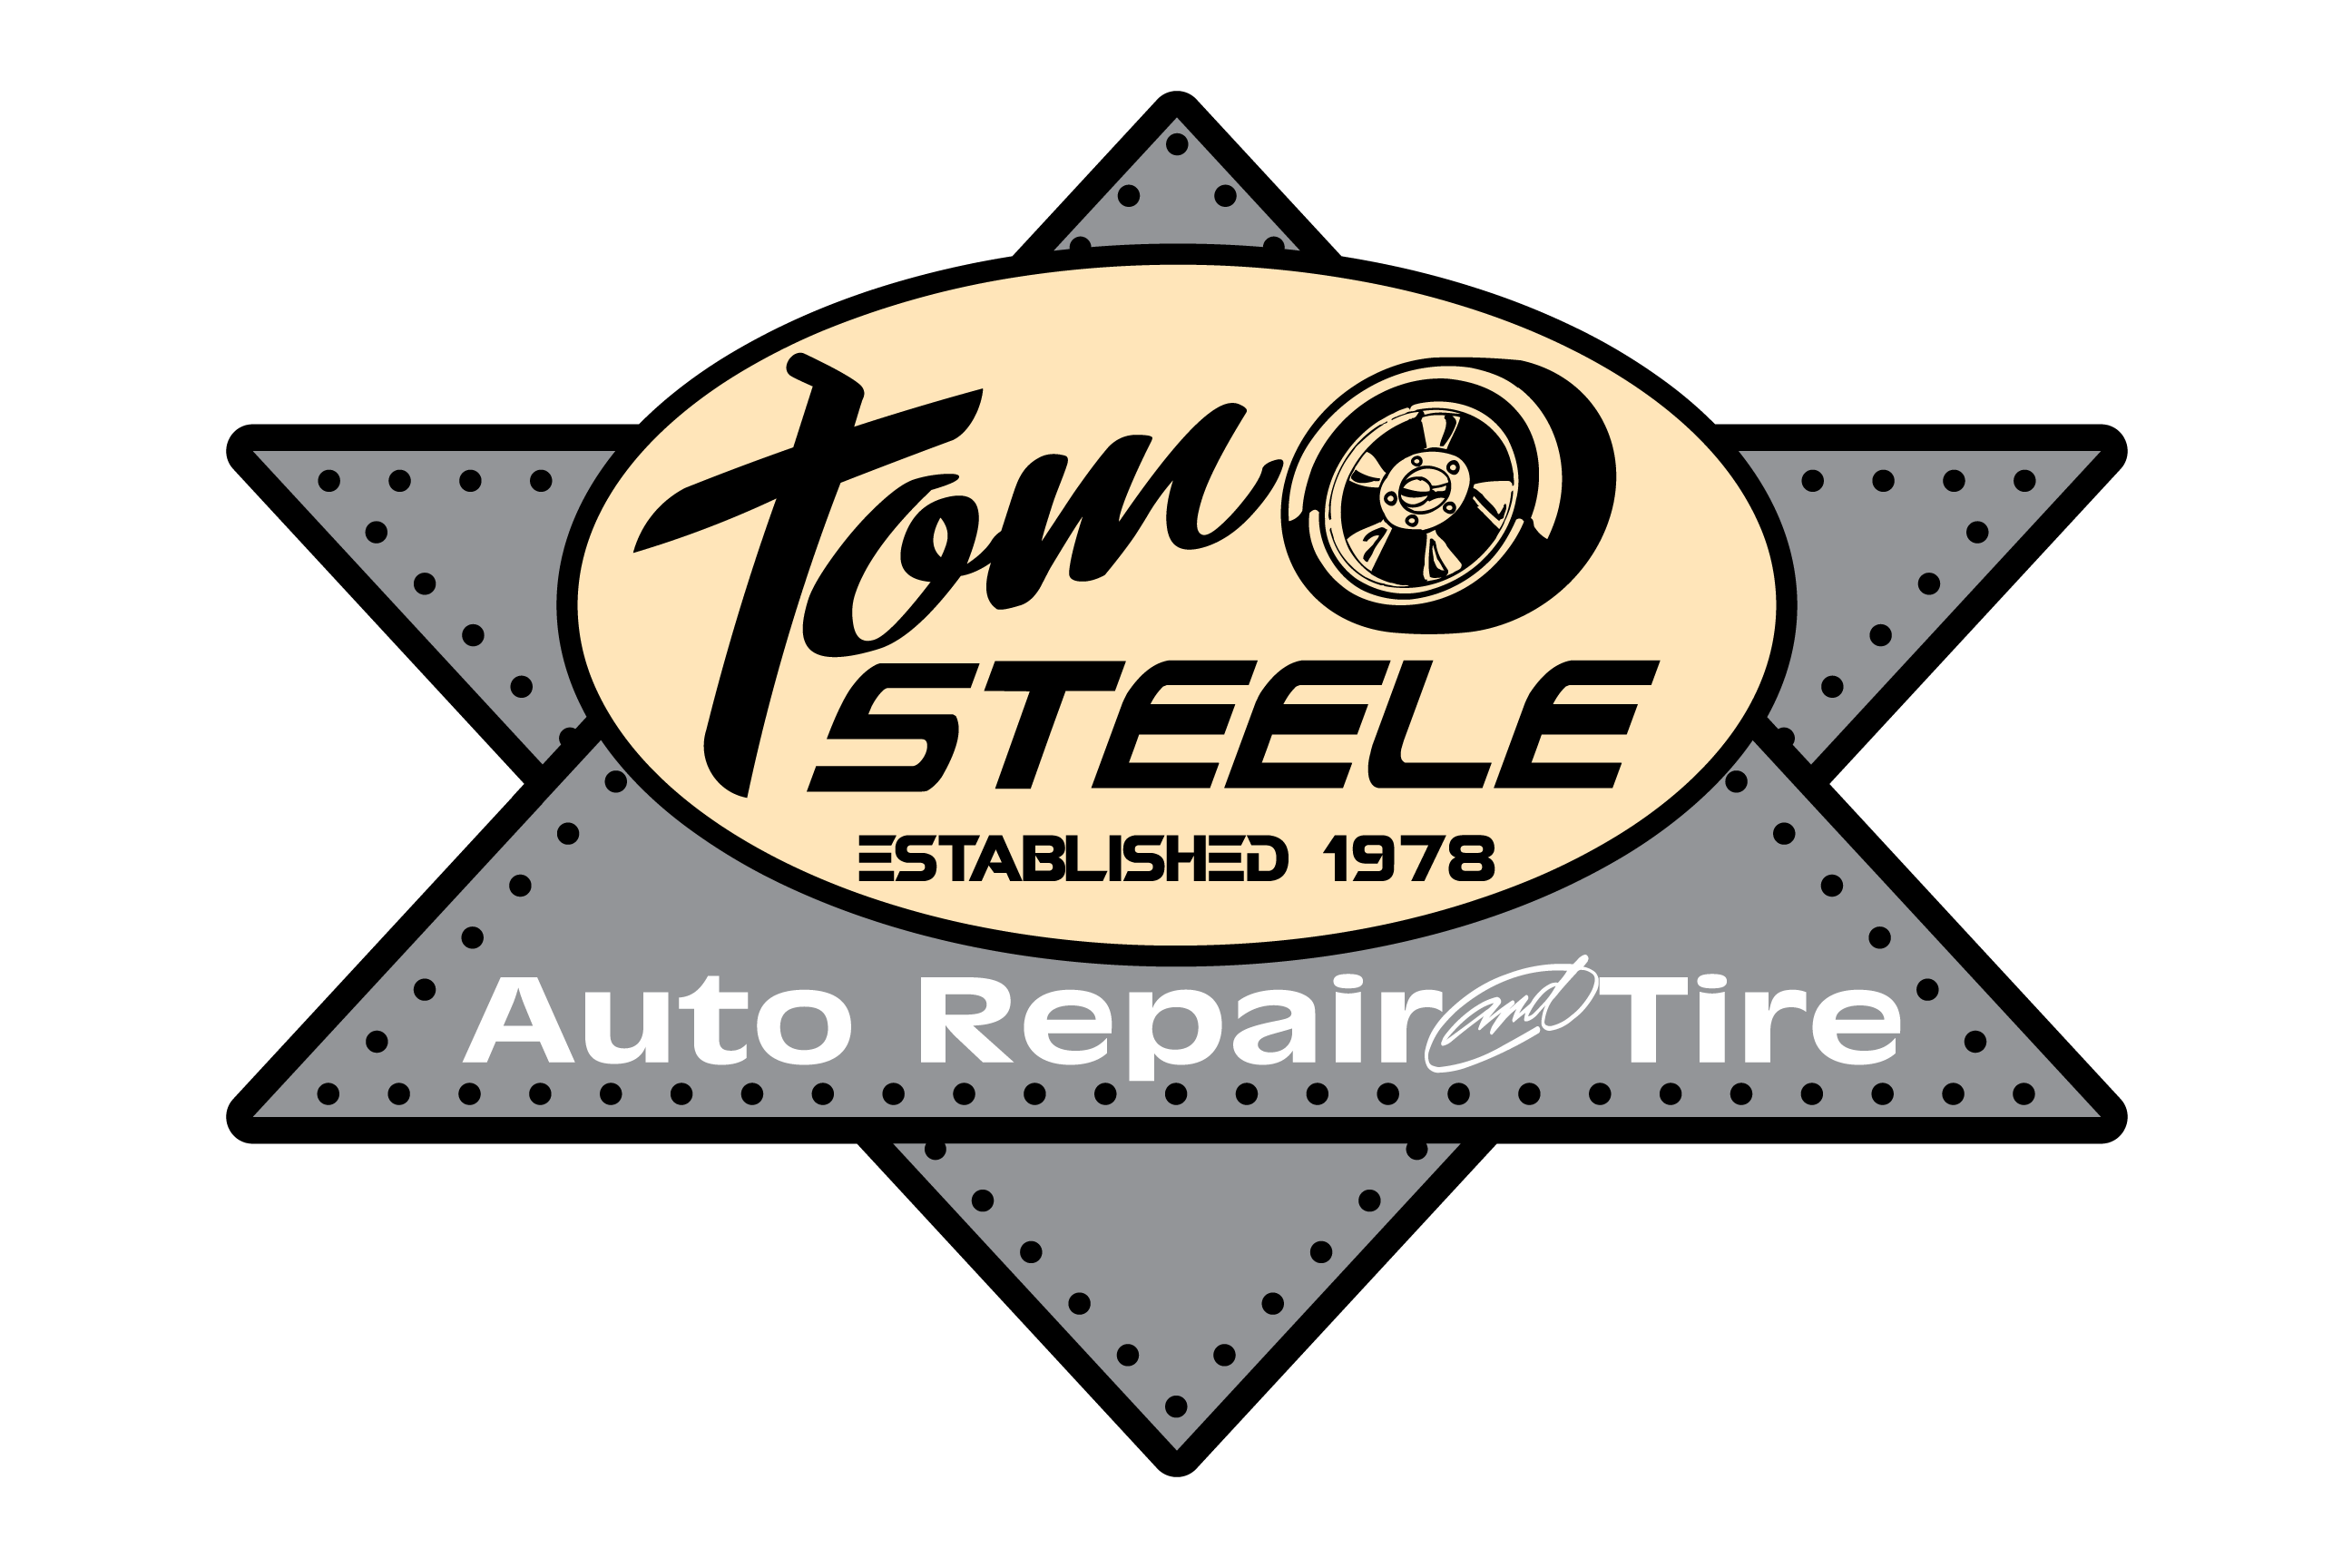 Tom Steele Auto Repair & Tire